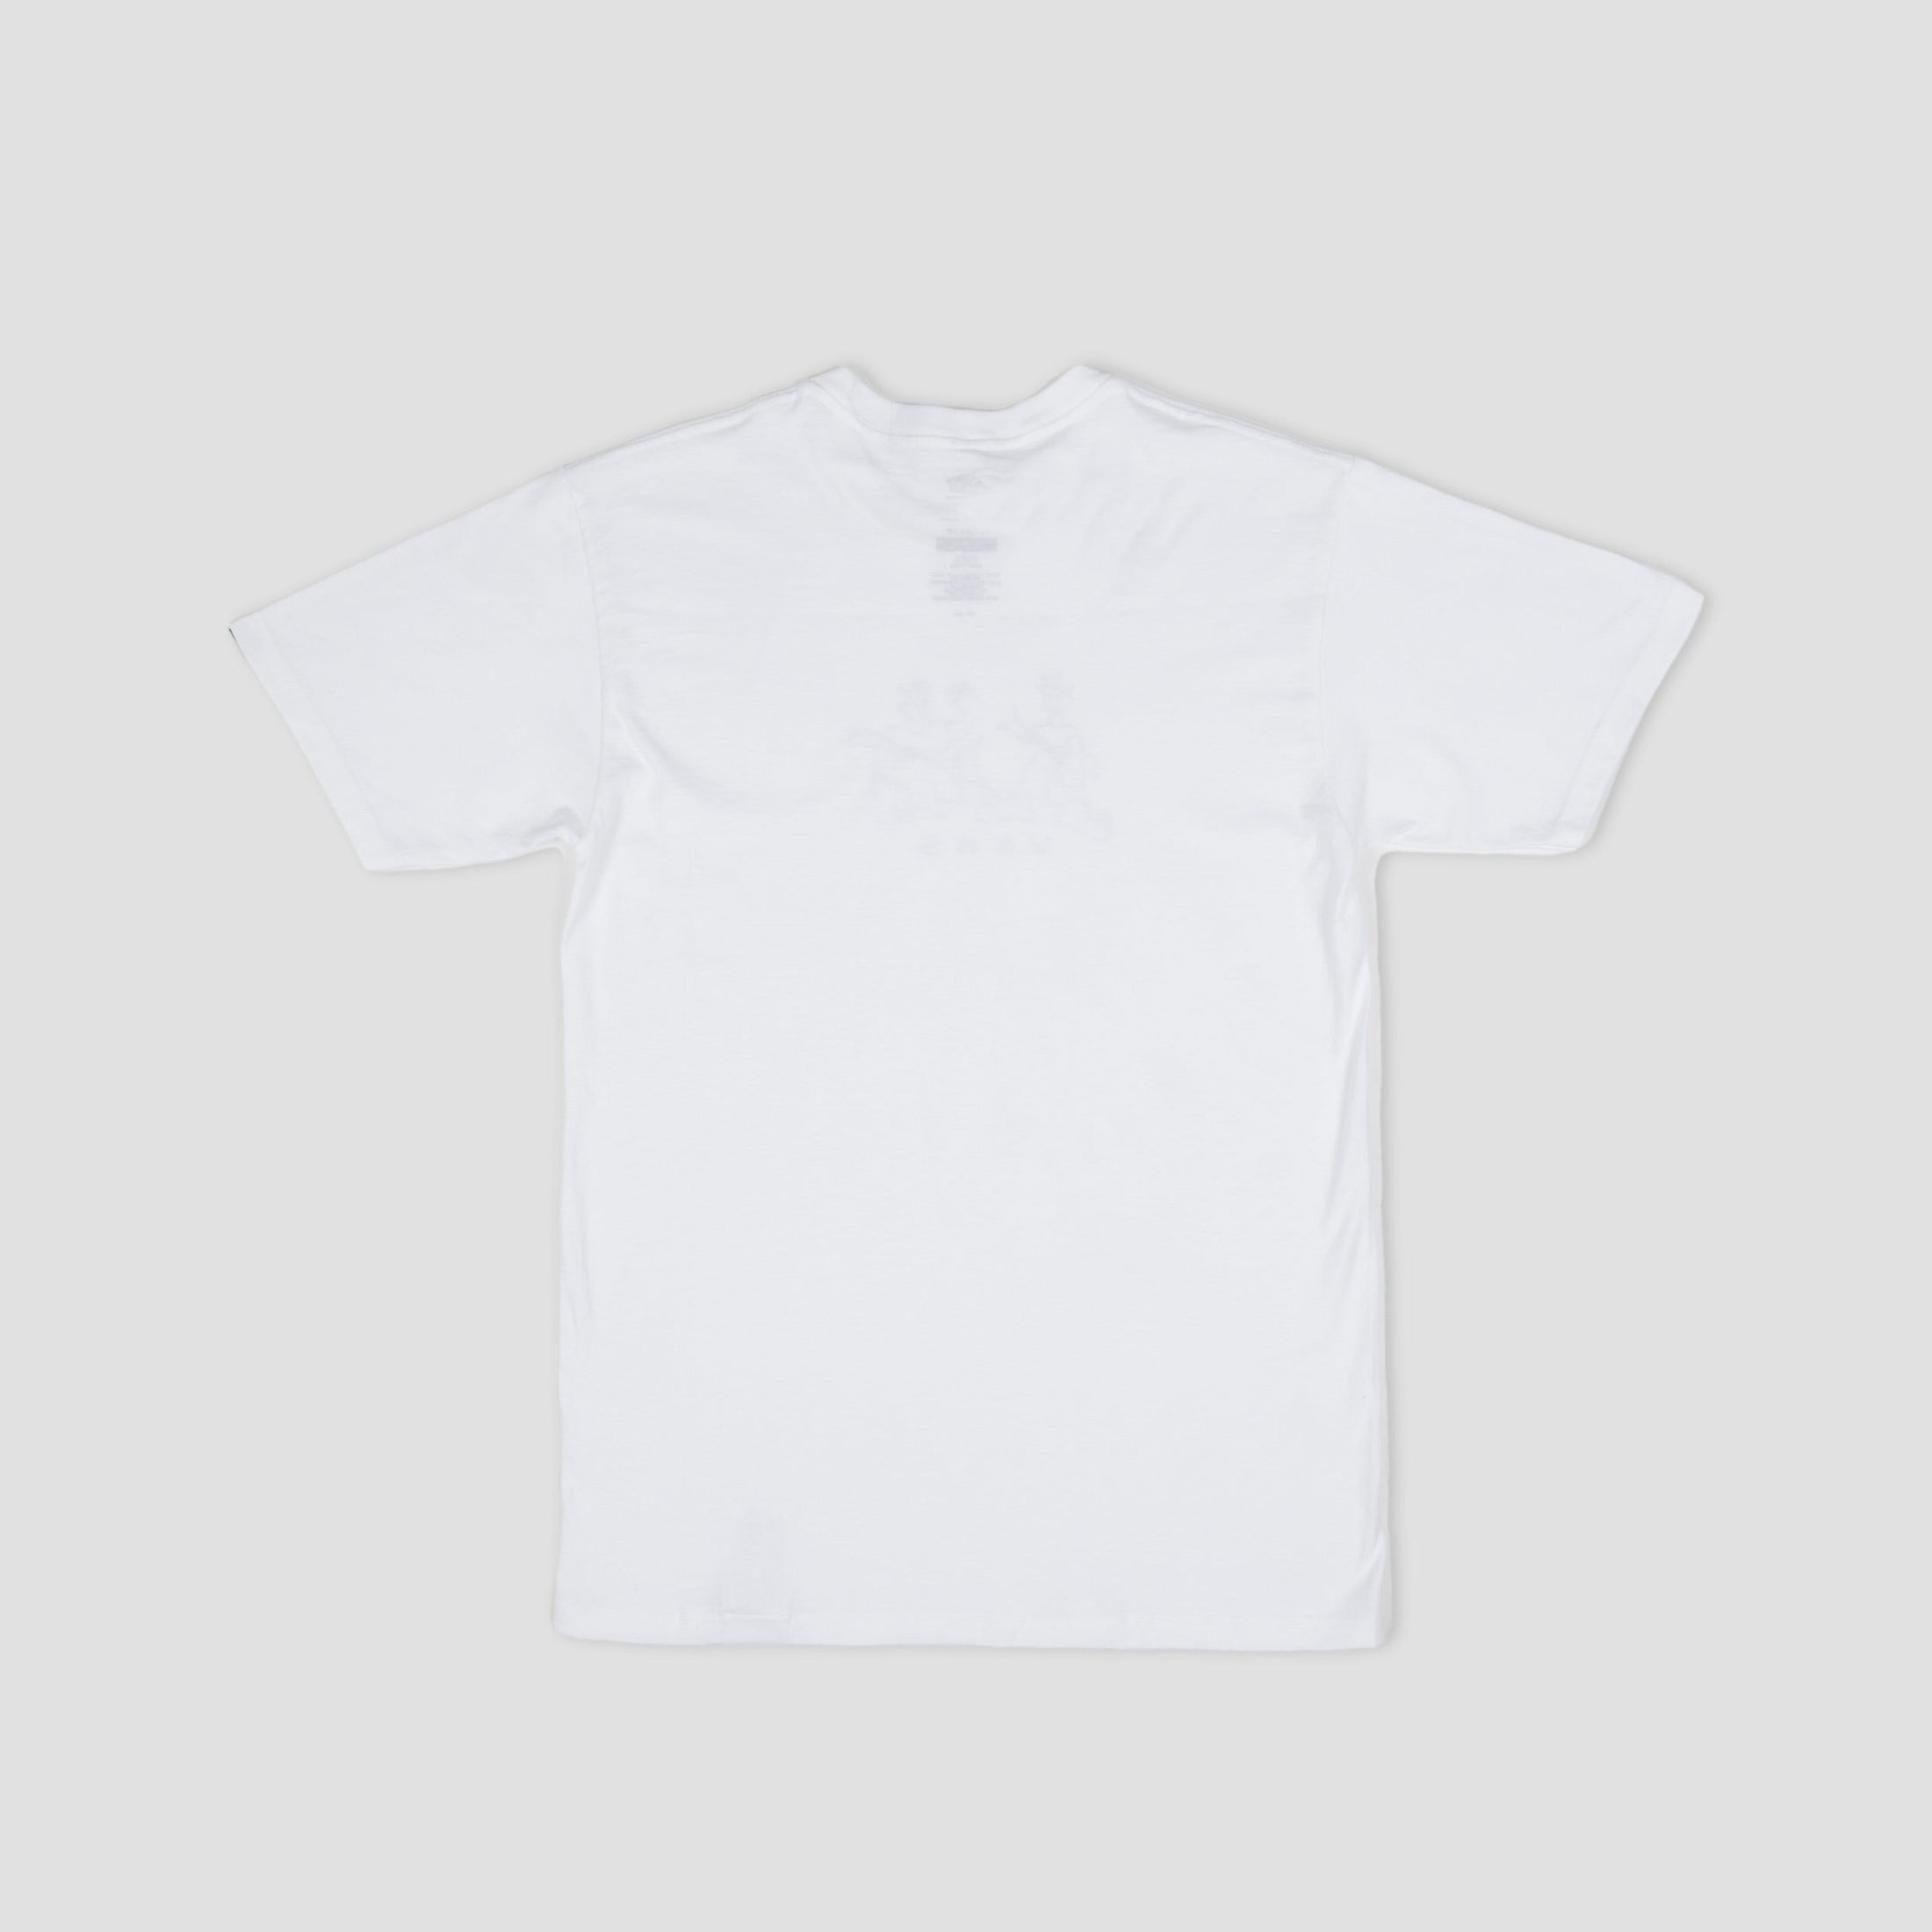 Vans Nick Michel T-Shirt White